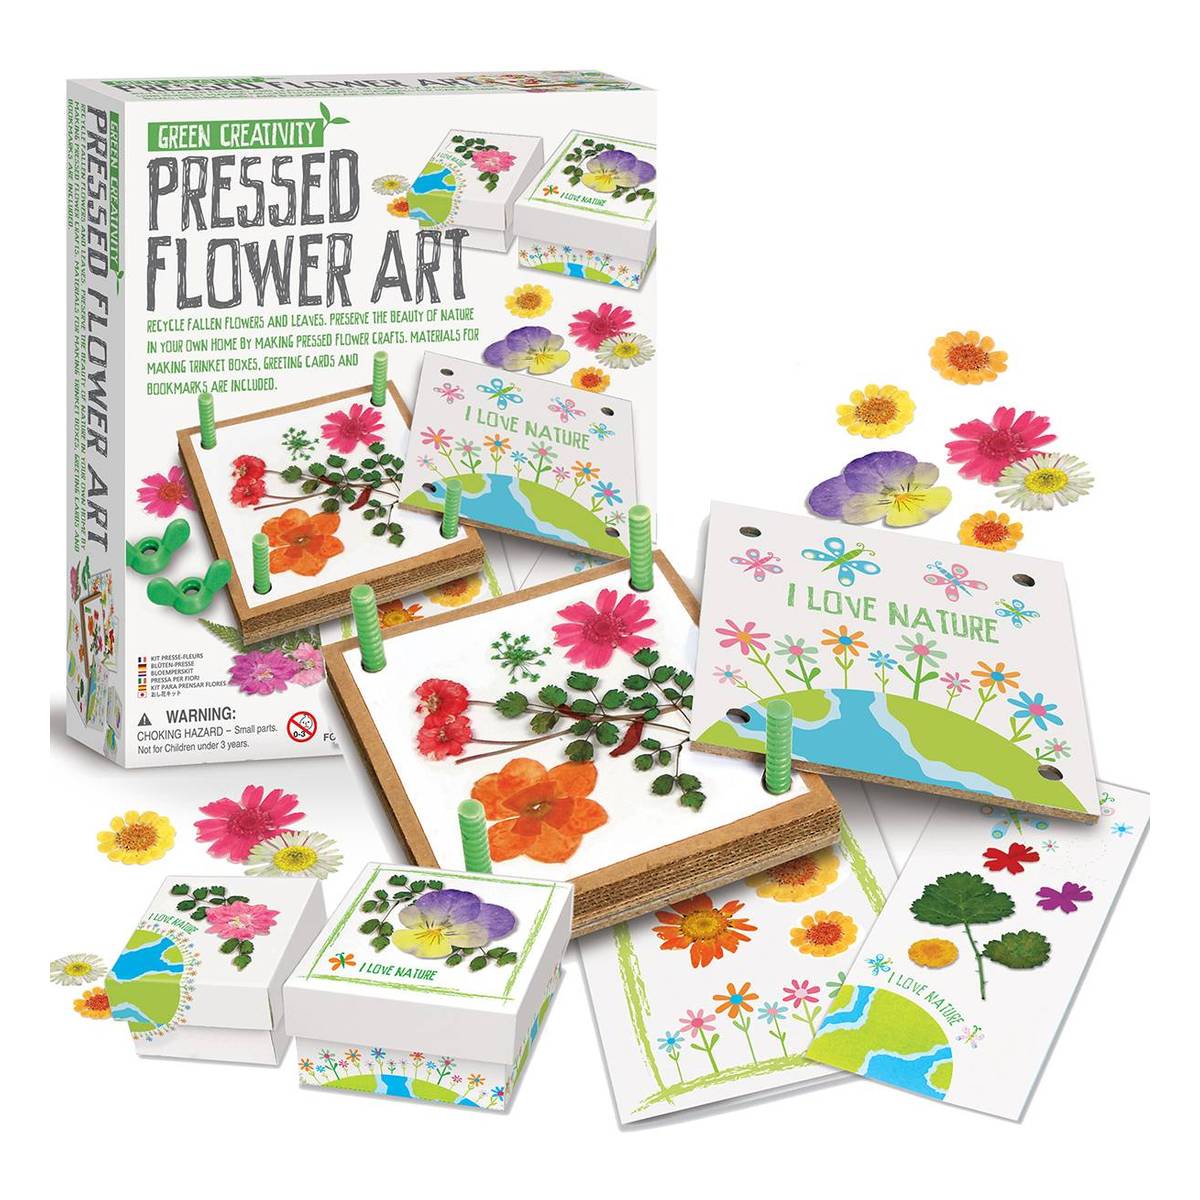 Book Crochet Flowers Free Download  Best Crochet Books Beginners - Flower  Crochet - Aliexpress